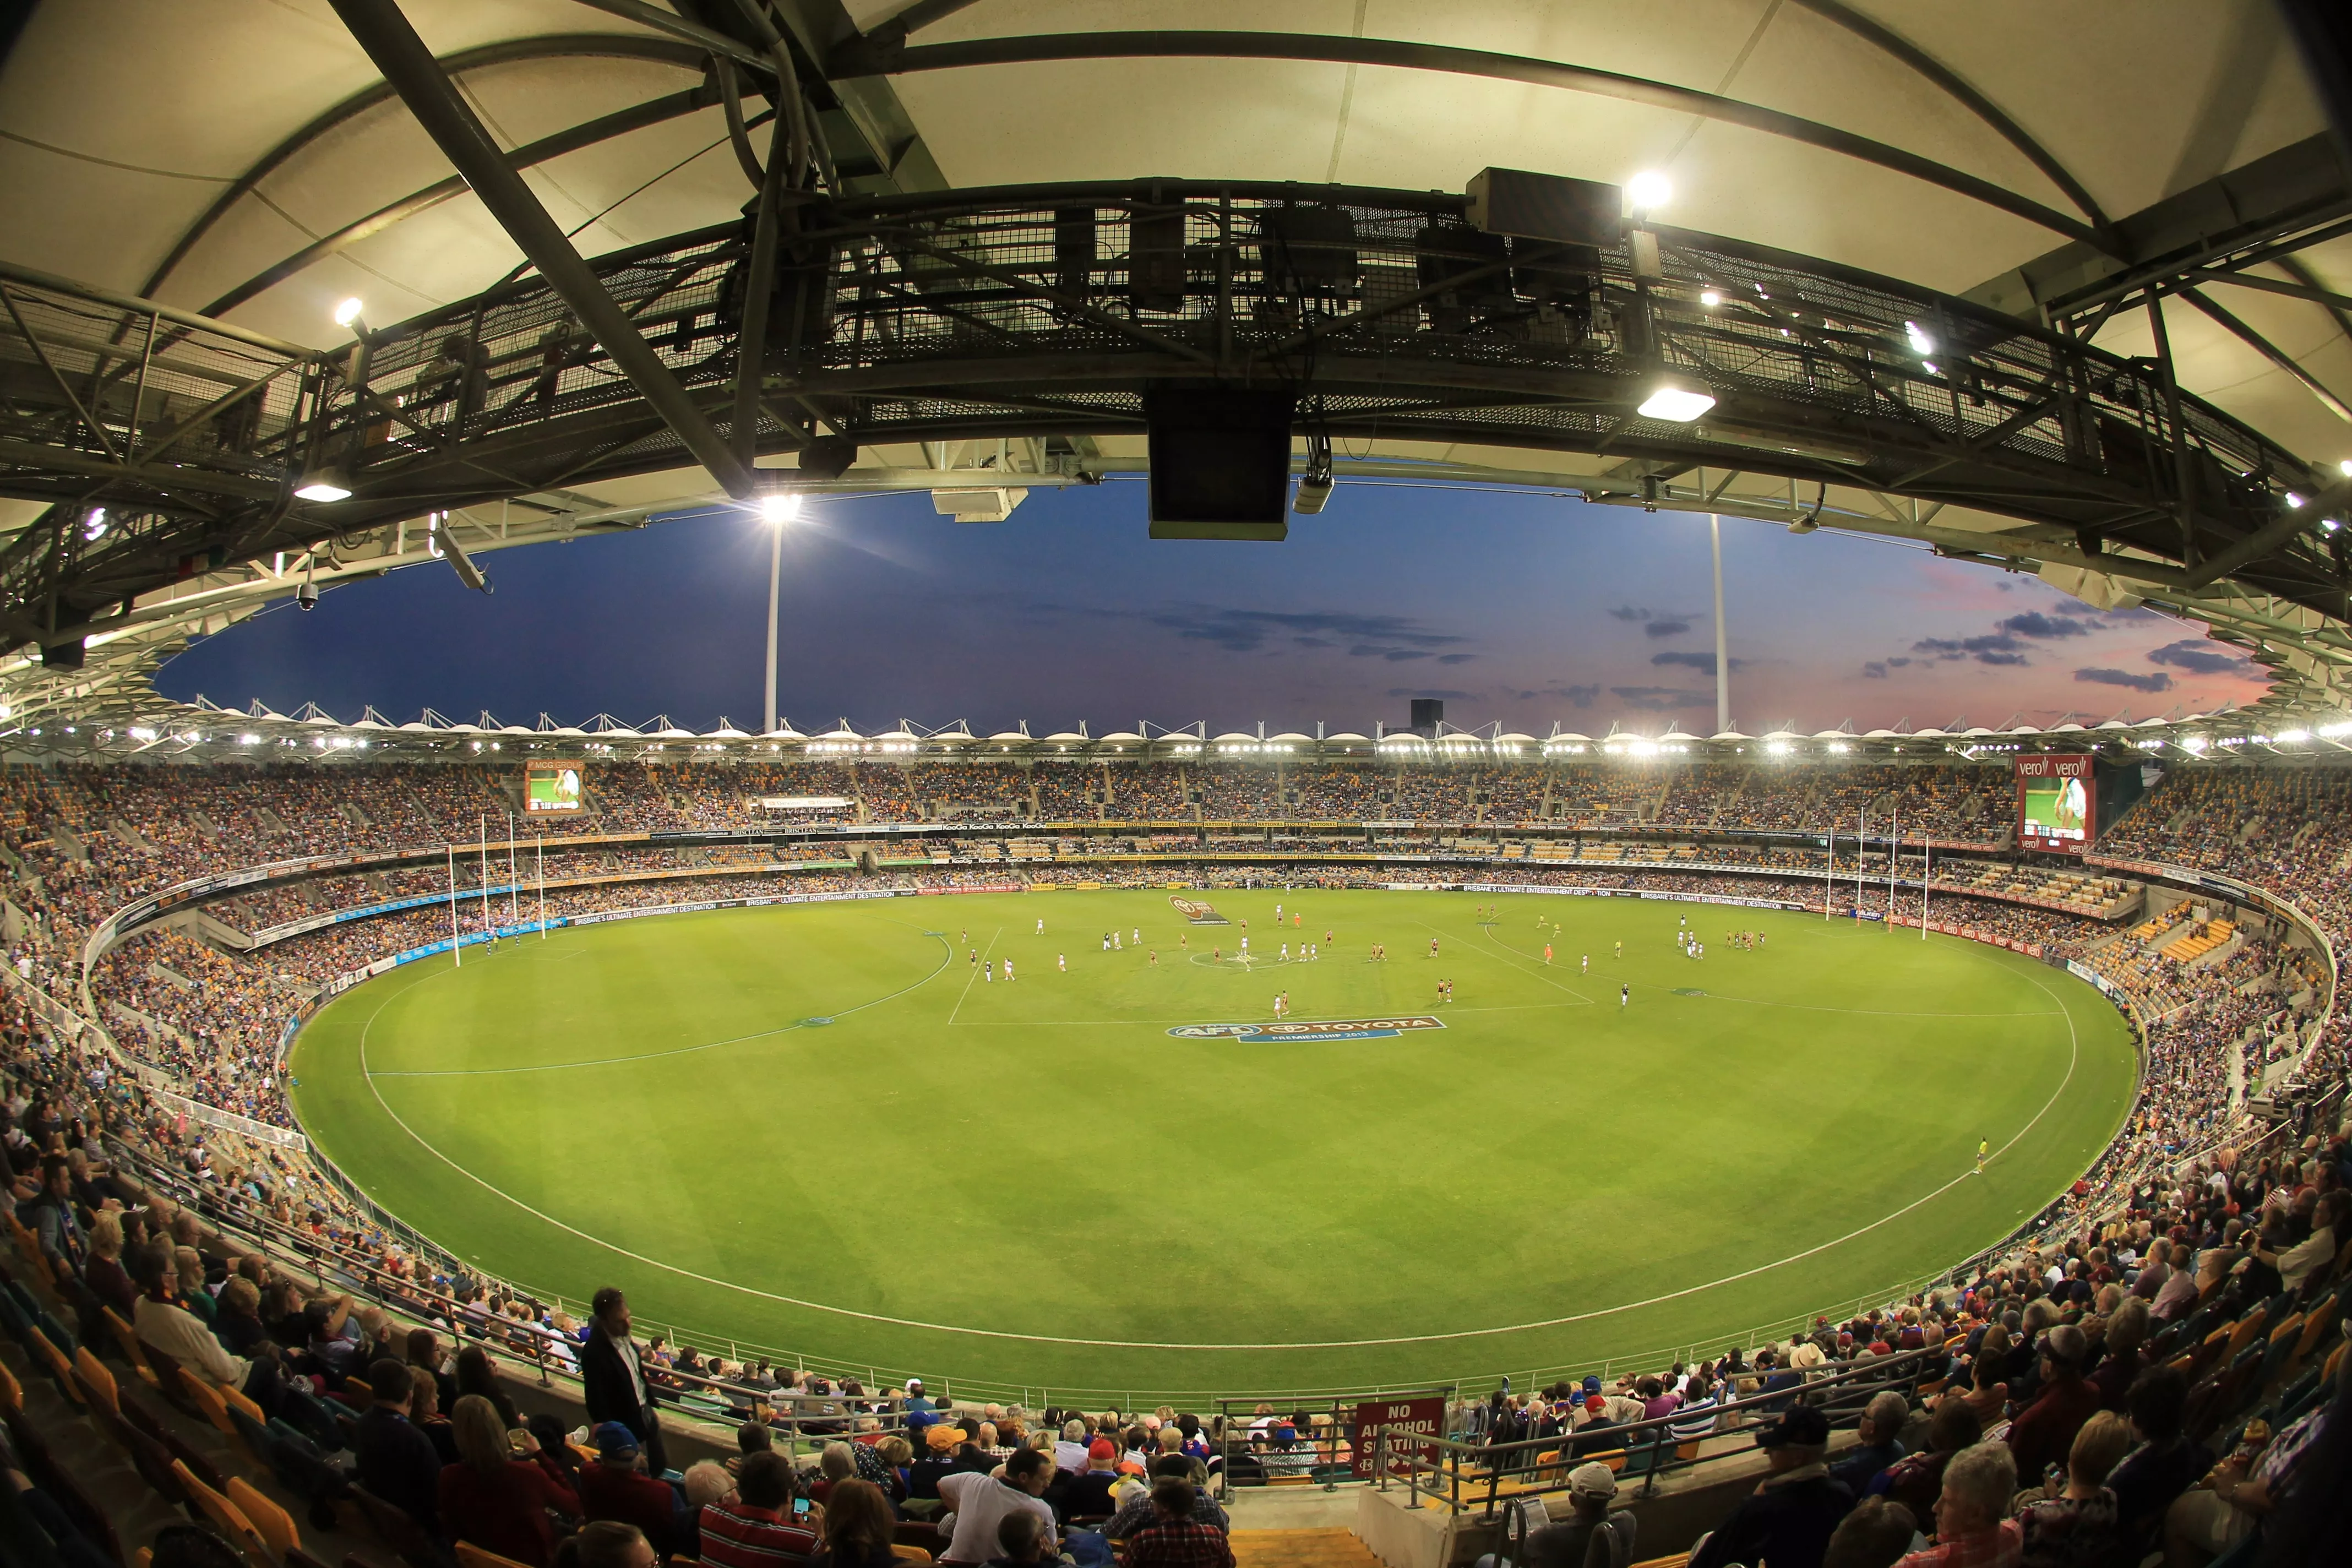 Brisbane Cricket Ground in Australia, Australia and Oceania | Cricket - Rated 4.2